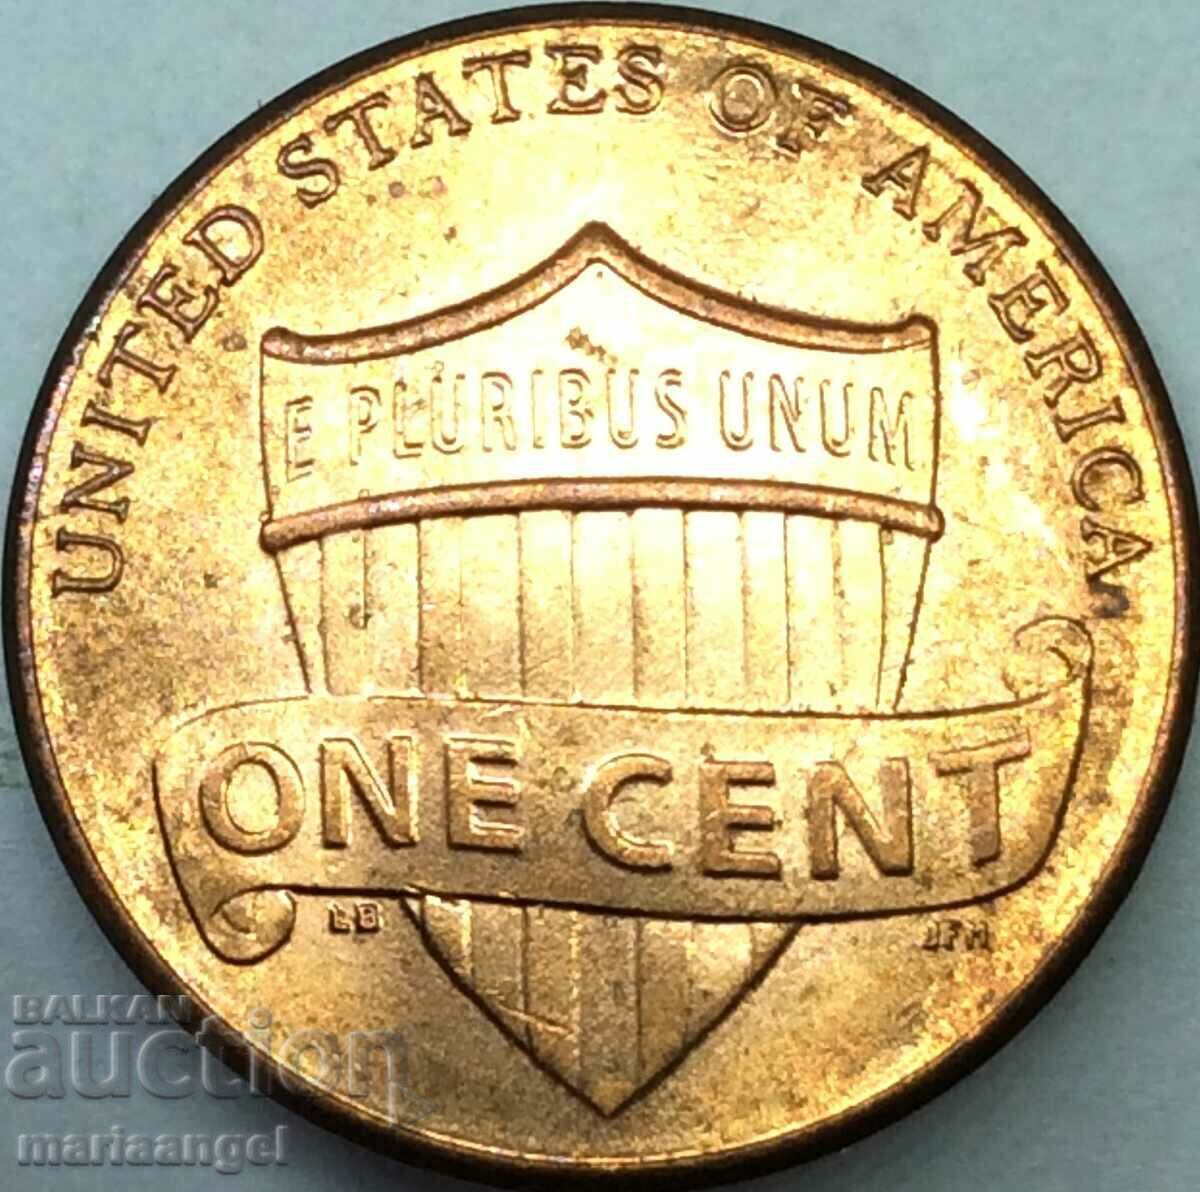 US 1 cent 2012